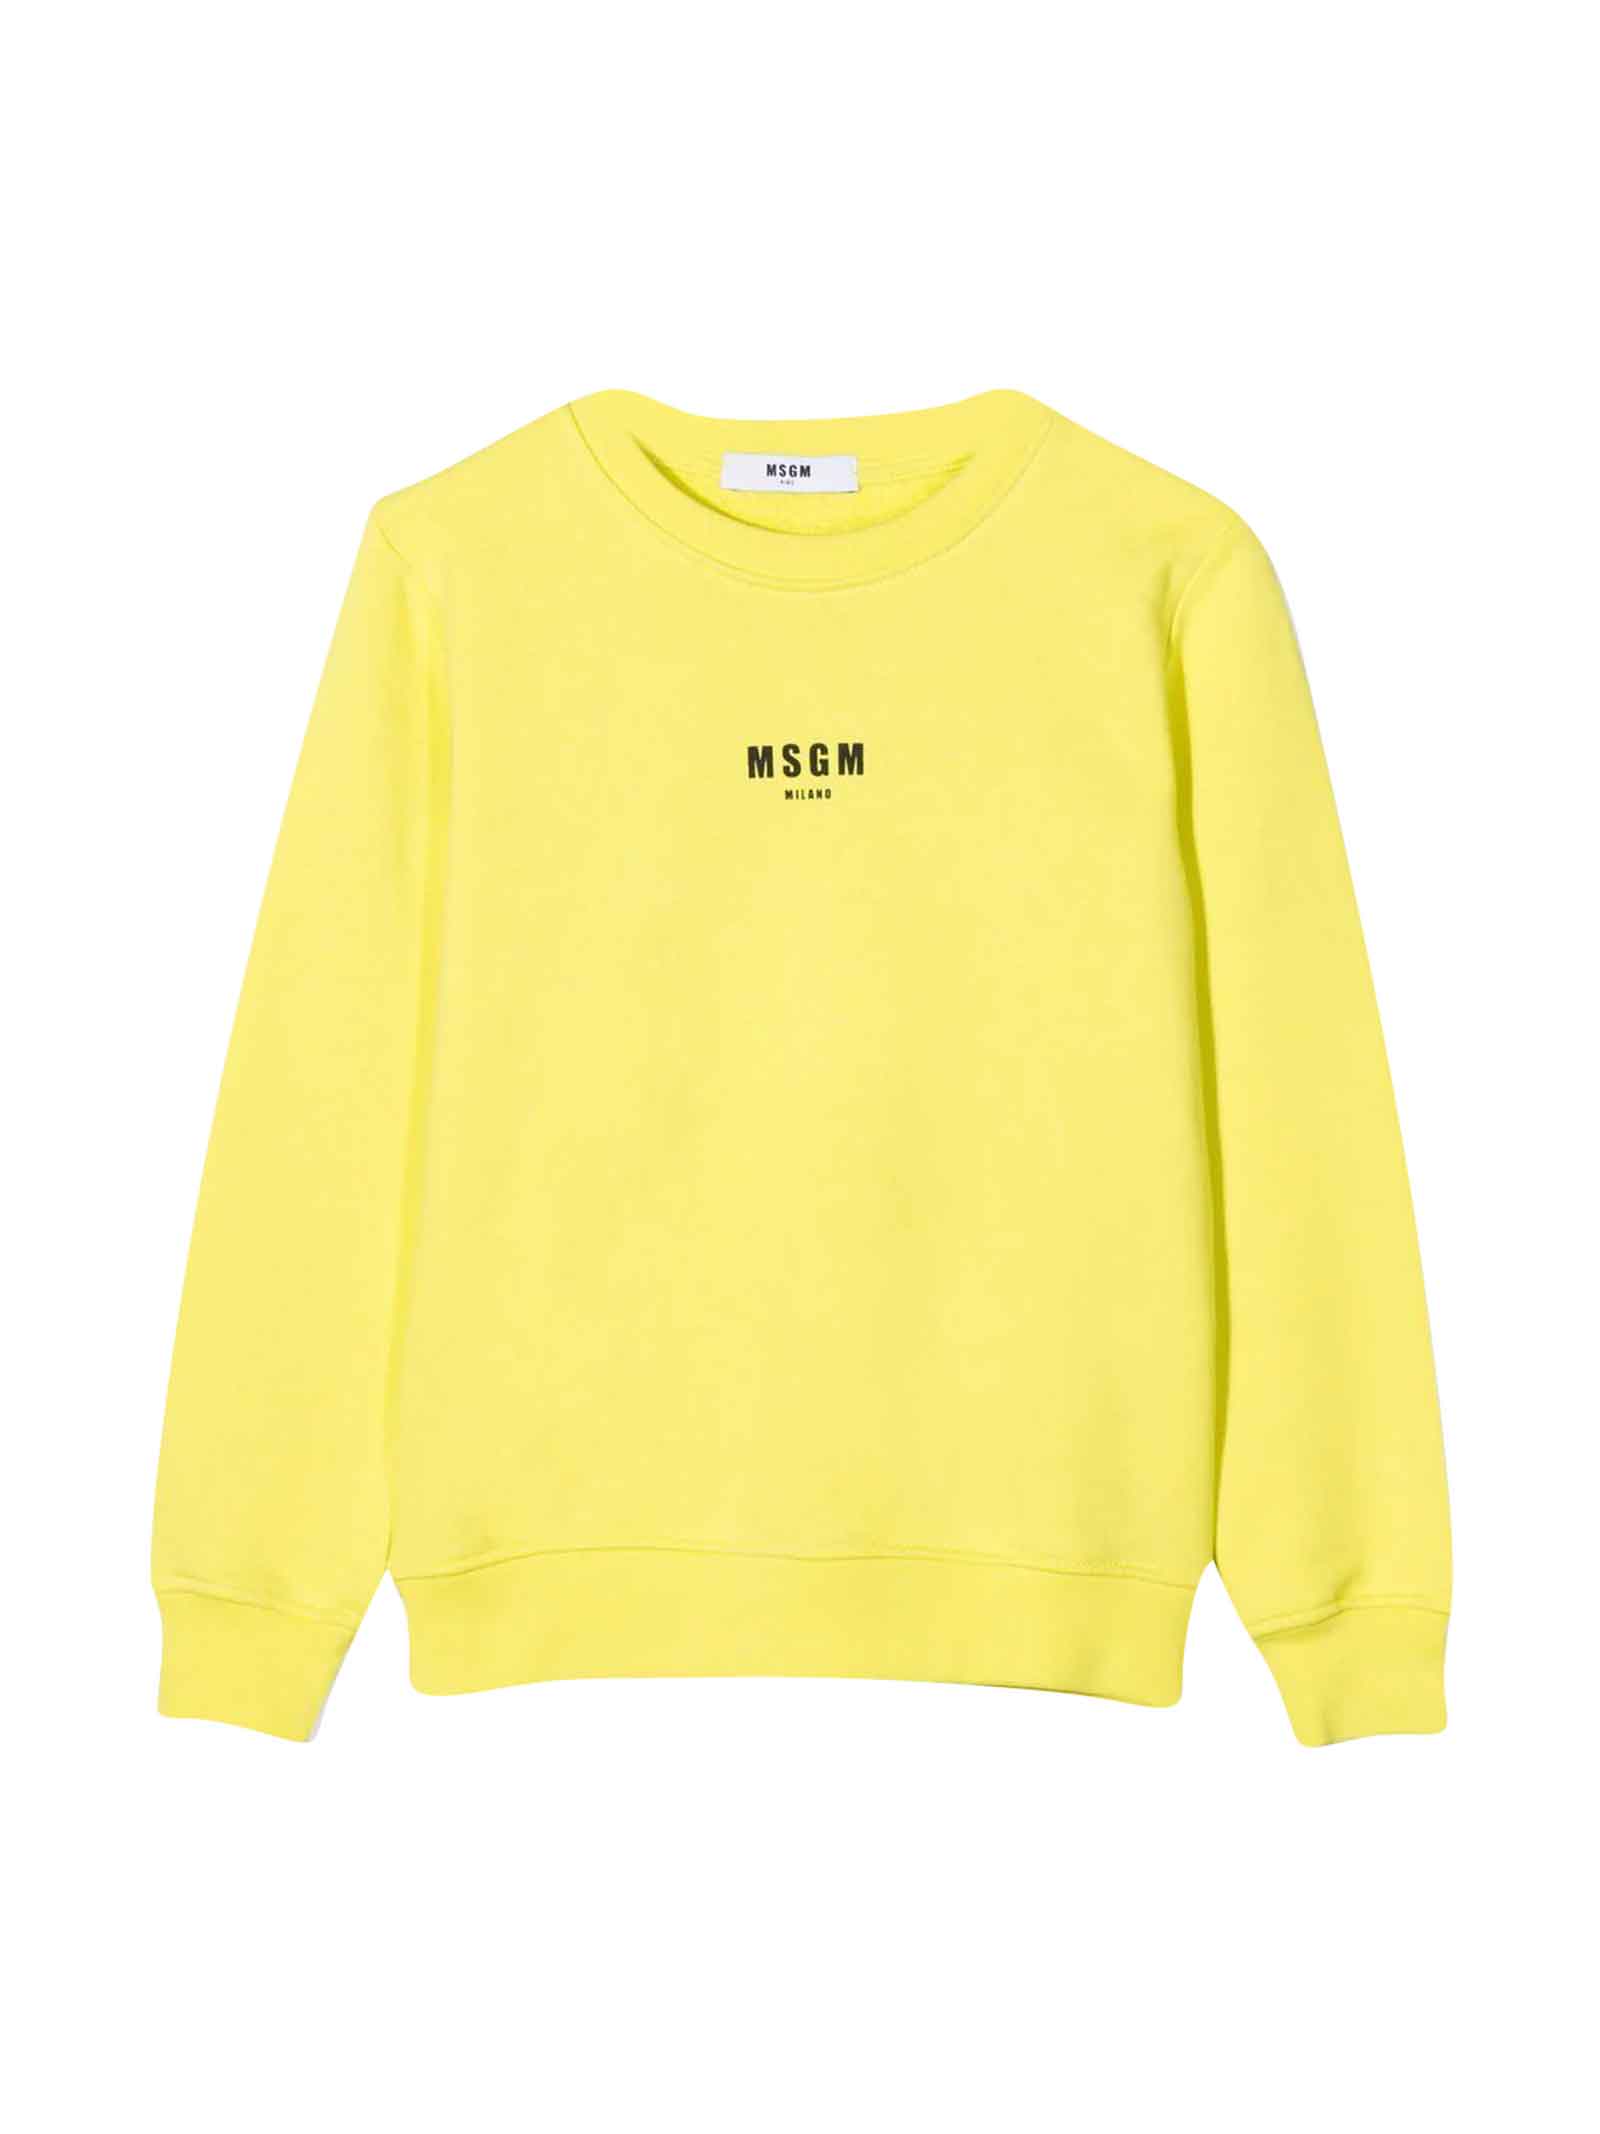 MSGM Yellow Sweatshirt Teen Boy